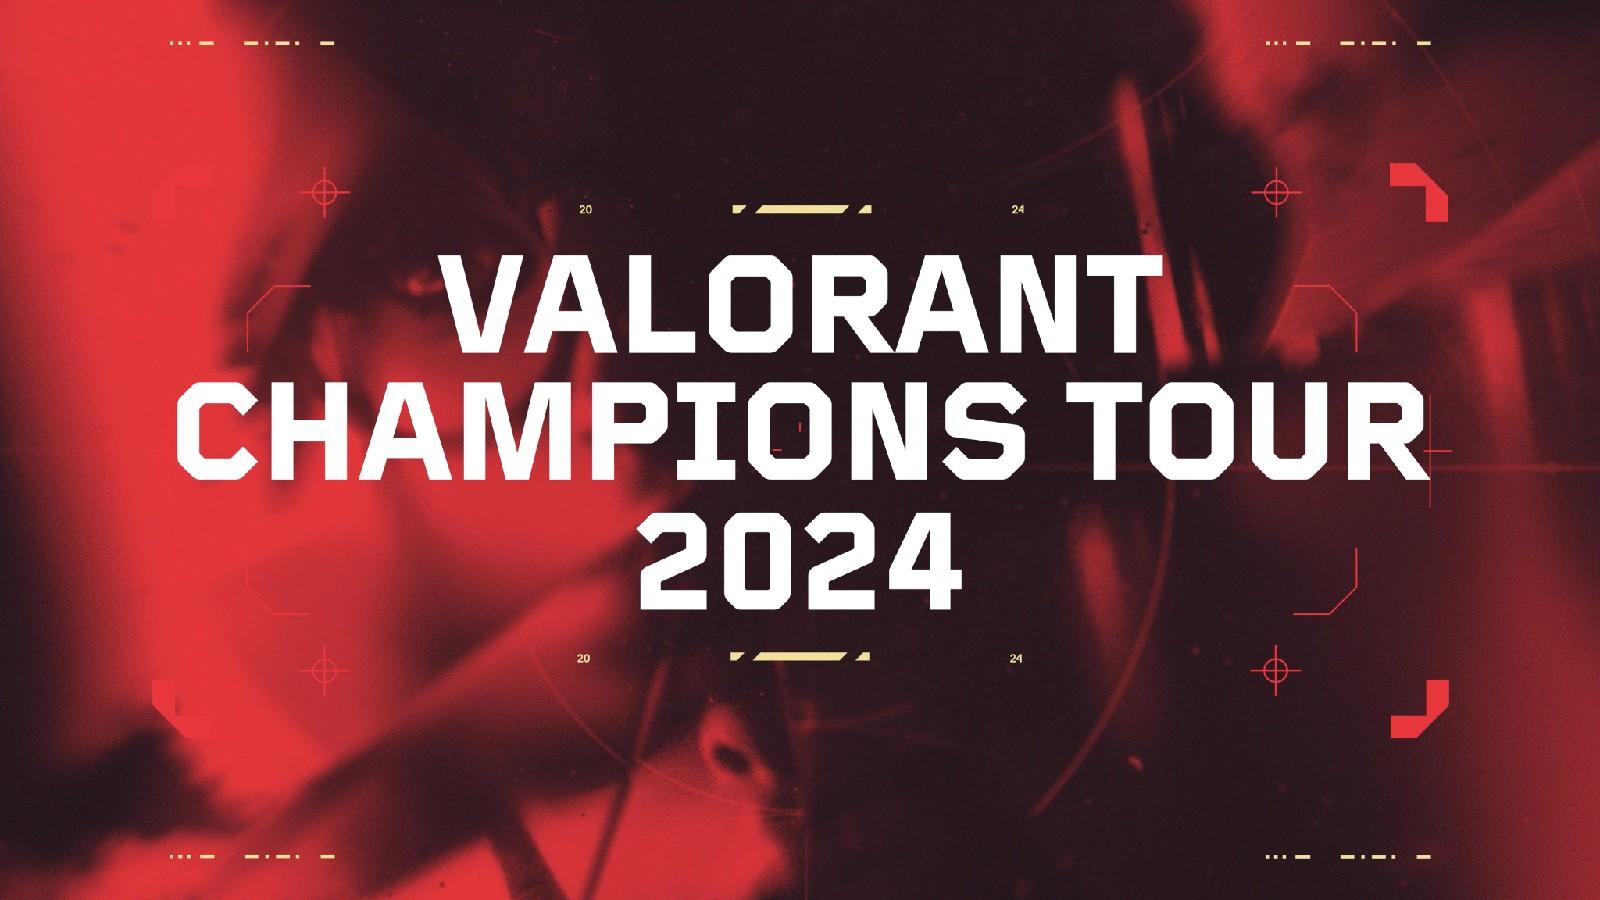 Riot Games reveals the future of VALORANT esports in 2023